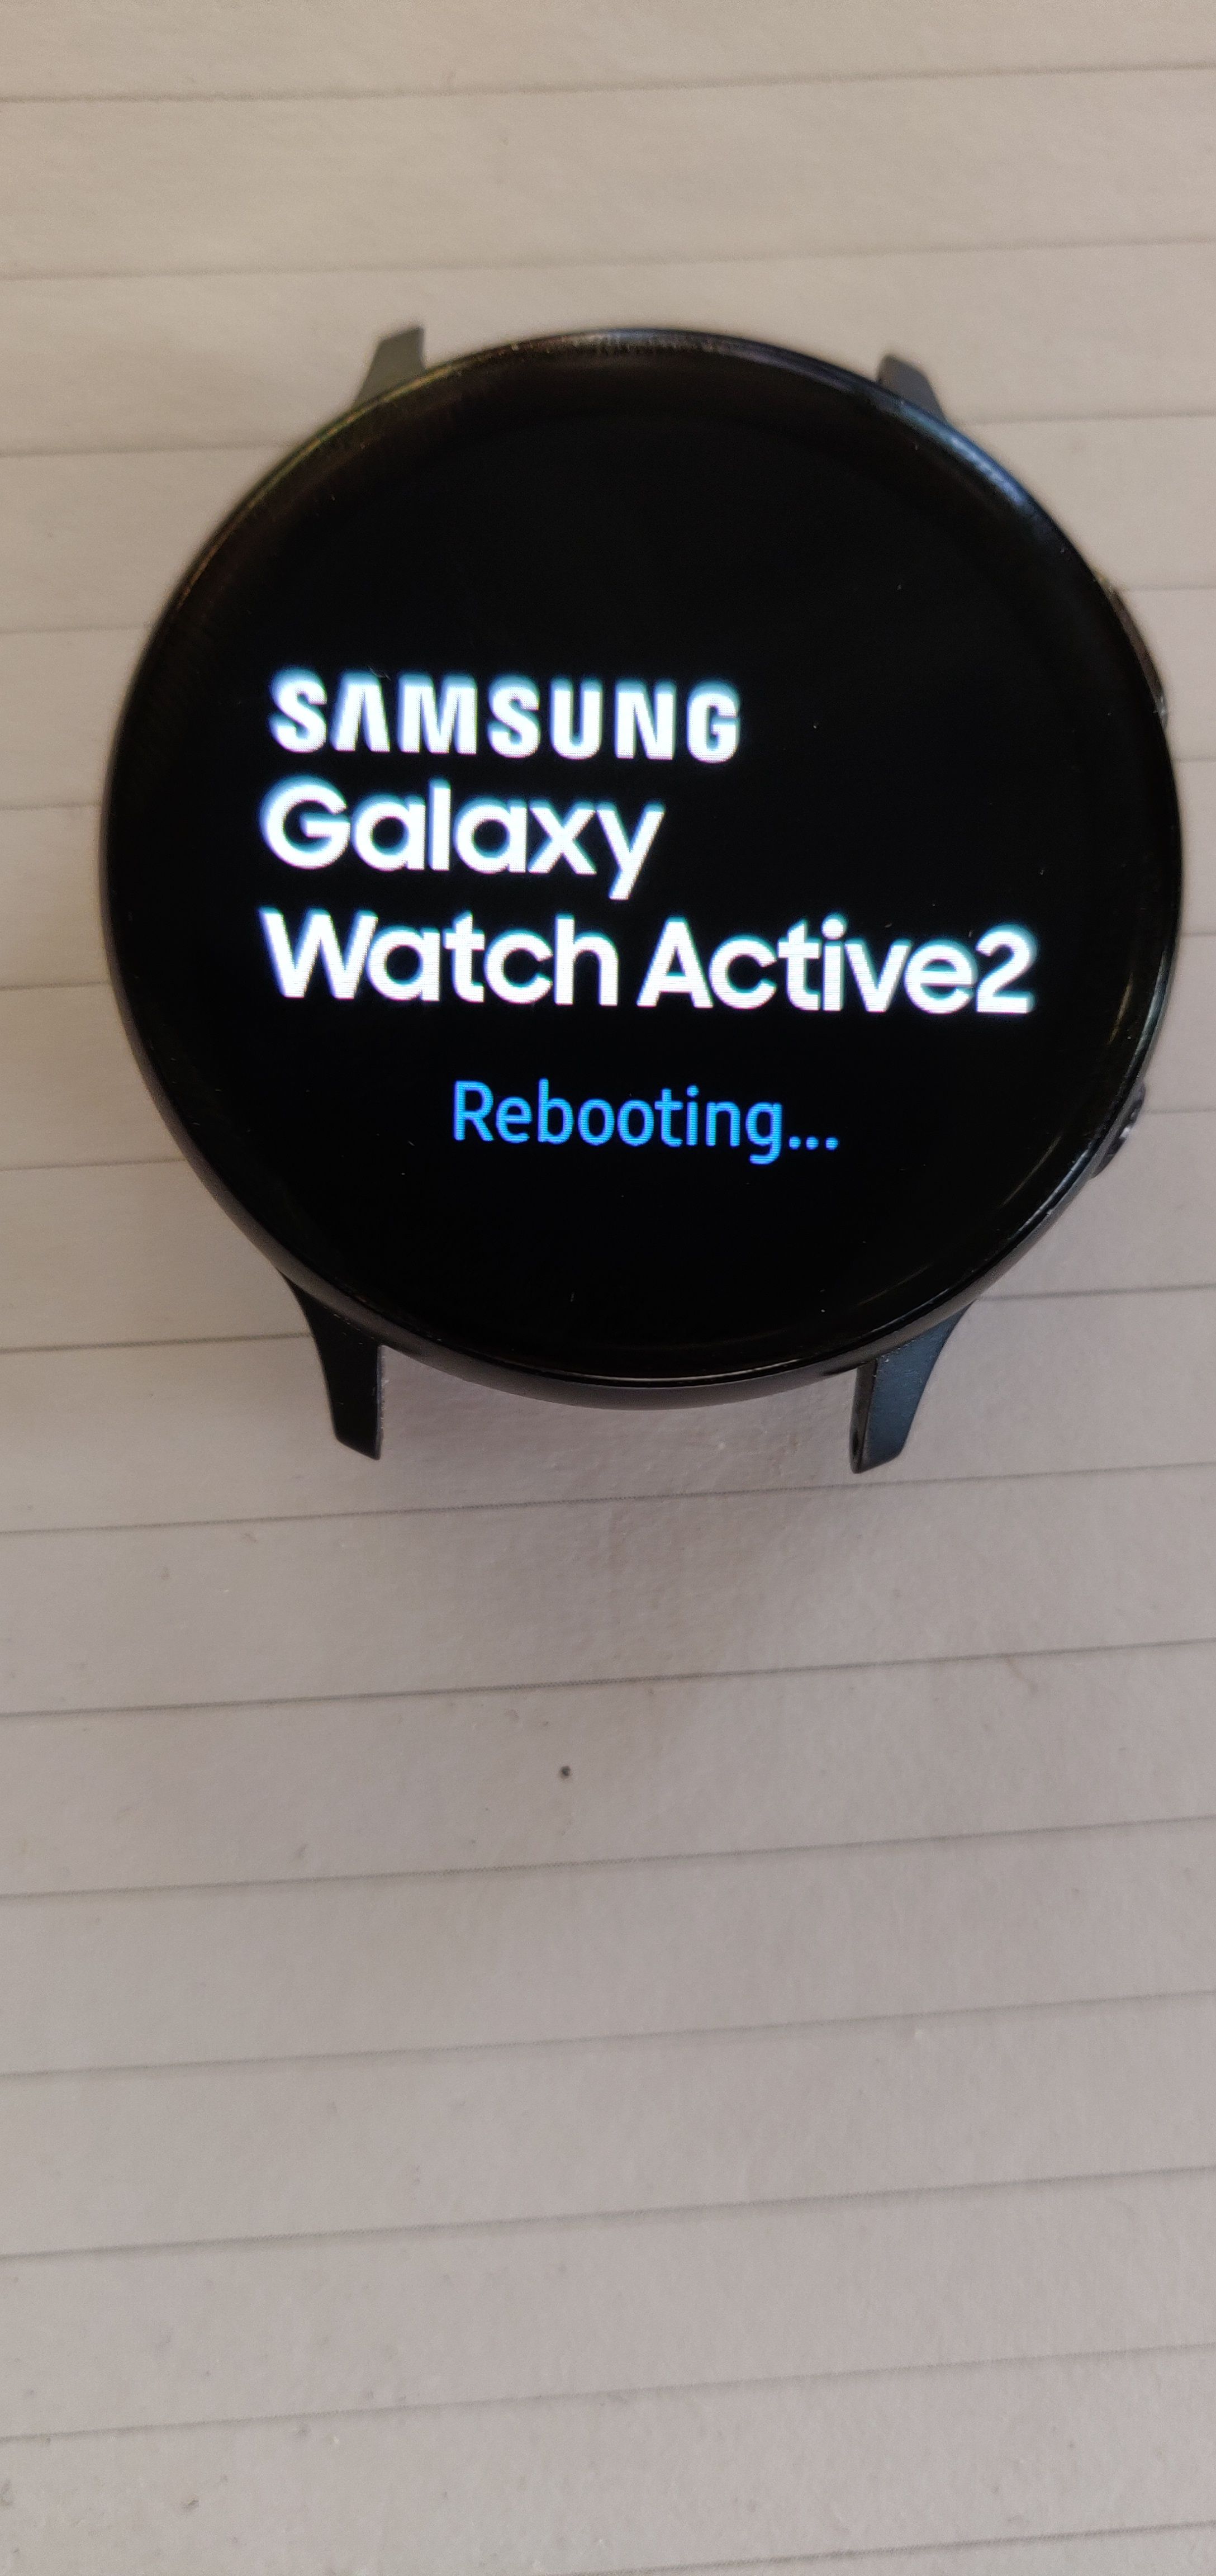 Watch Active 2 qui reboot en boucle !!! - Samsung Community